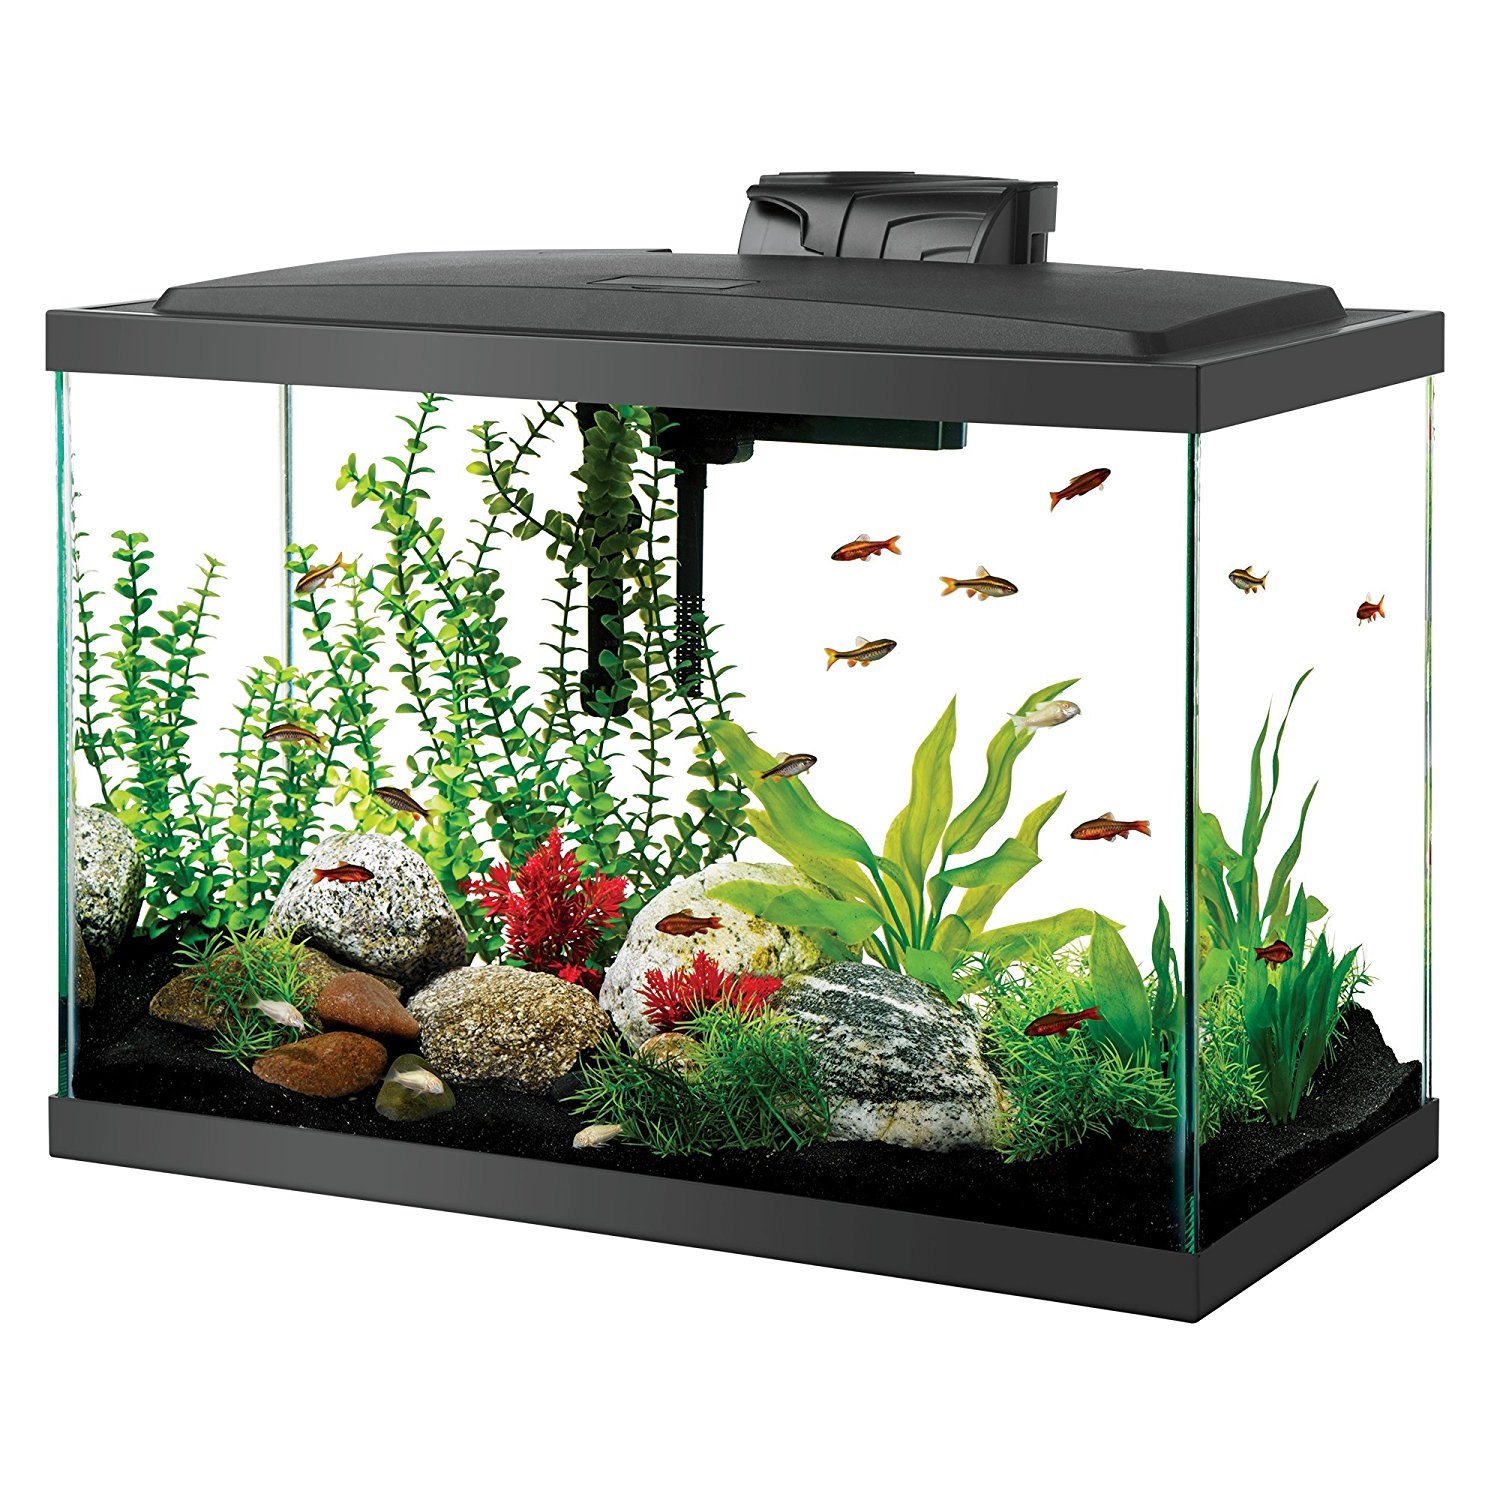 Amazon.com : Aqueon Aquarium Fish Tank Starter Kits with LED ...